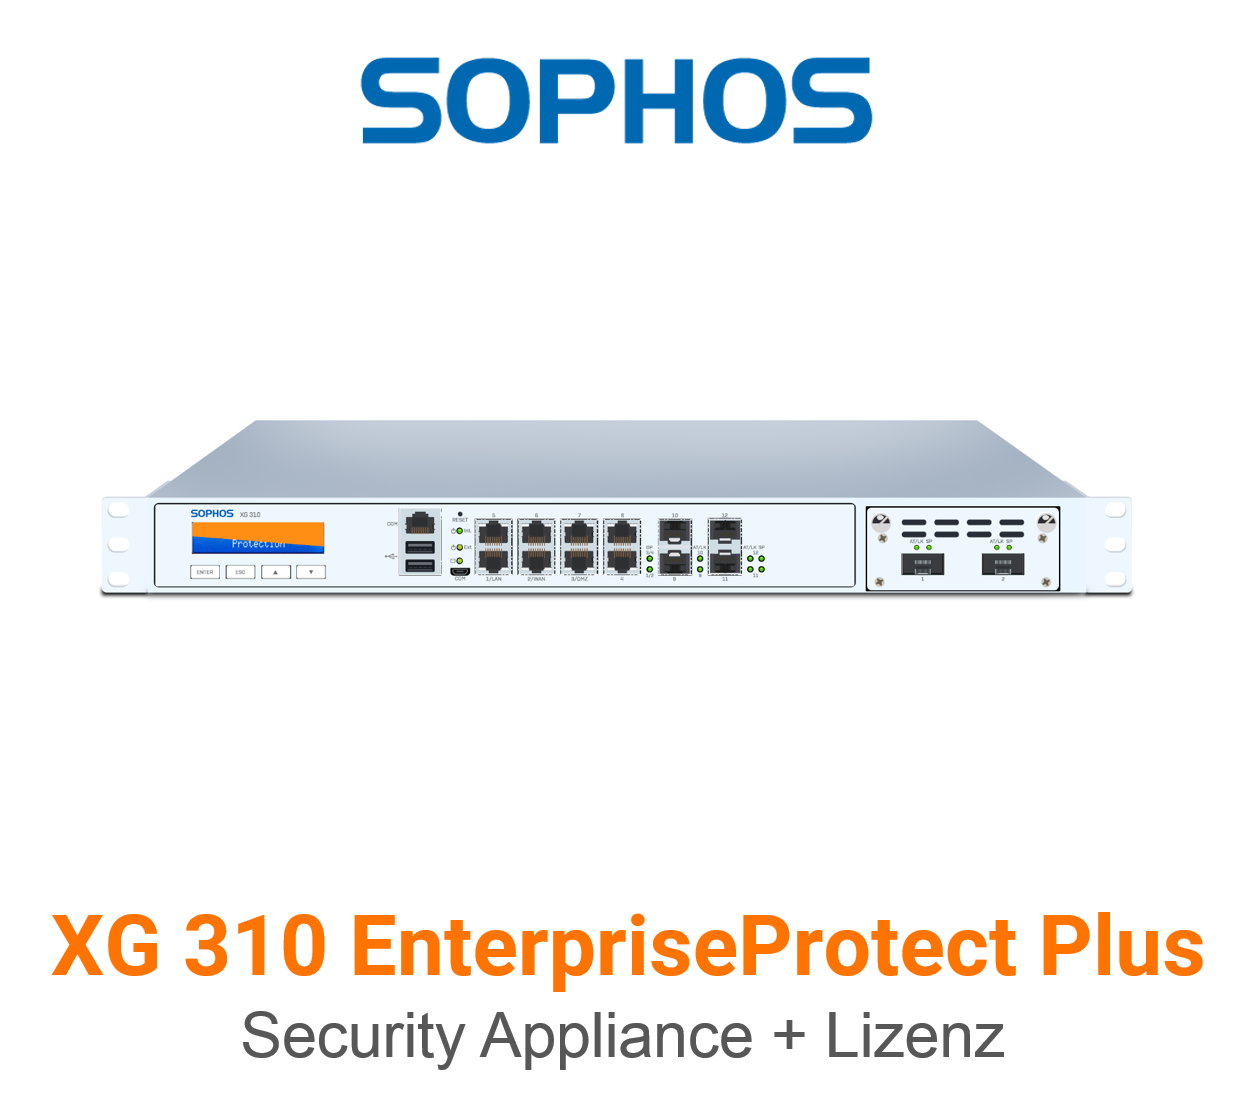 Sophos XG 310 EnterpriseProtect Plus Bundle (Hardware + Lizenz)